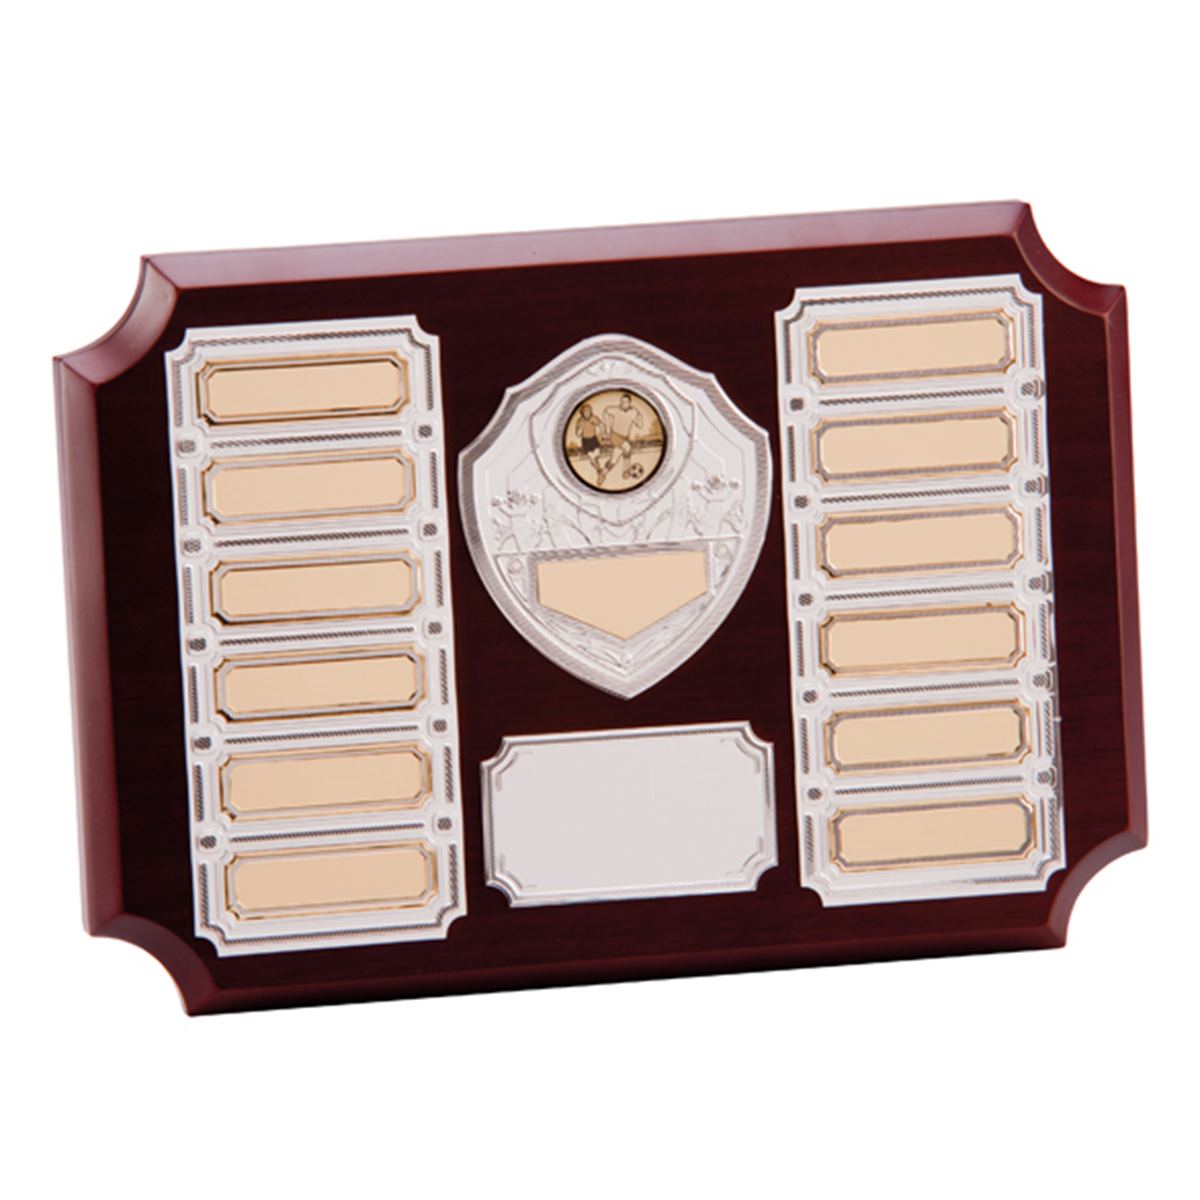 Premier Plaque Annual Shield Award - 12 Side Shields